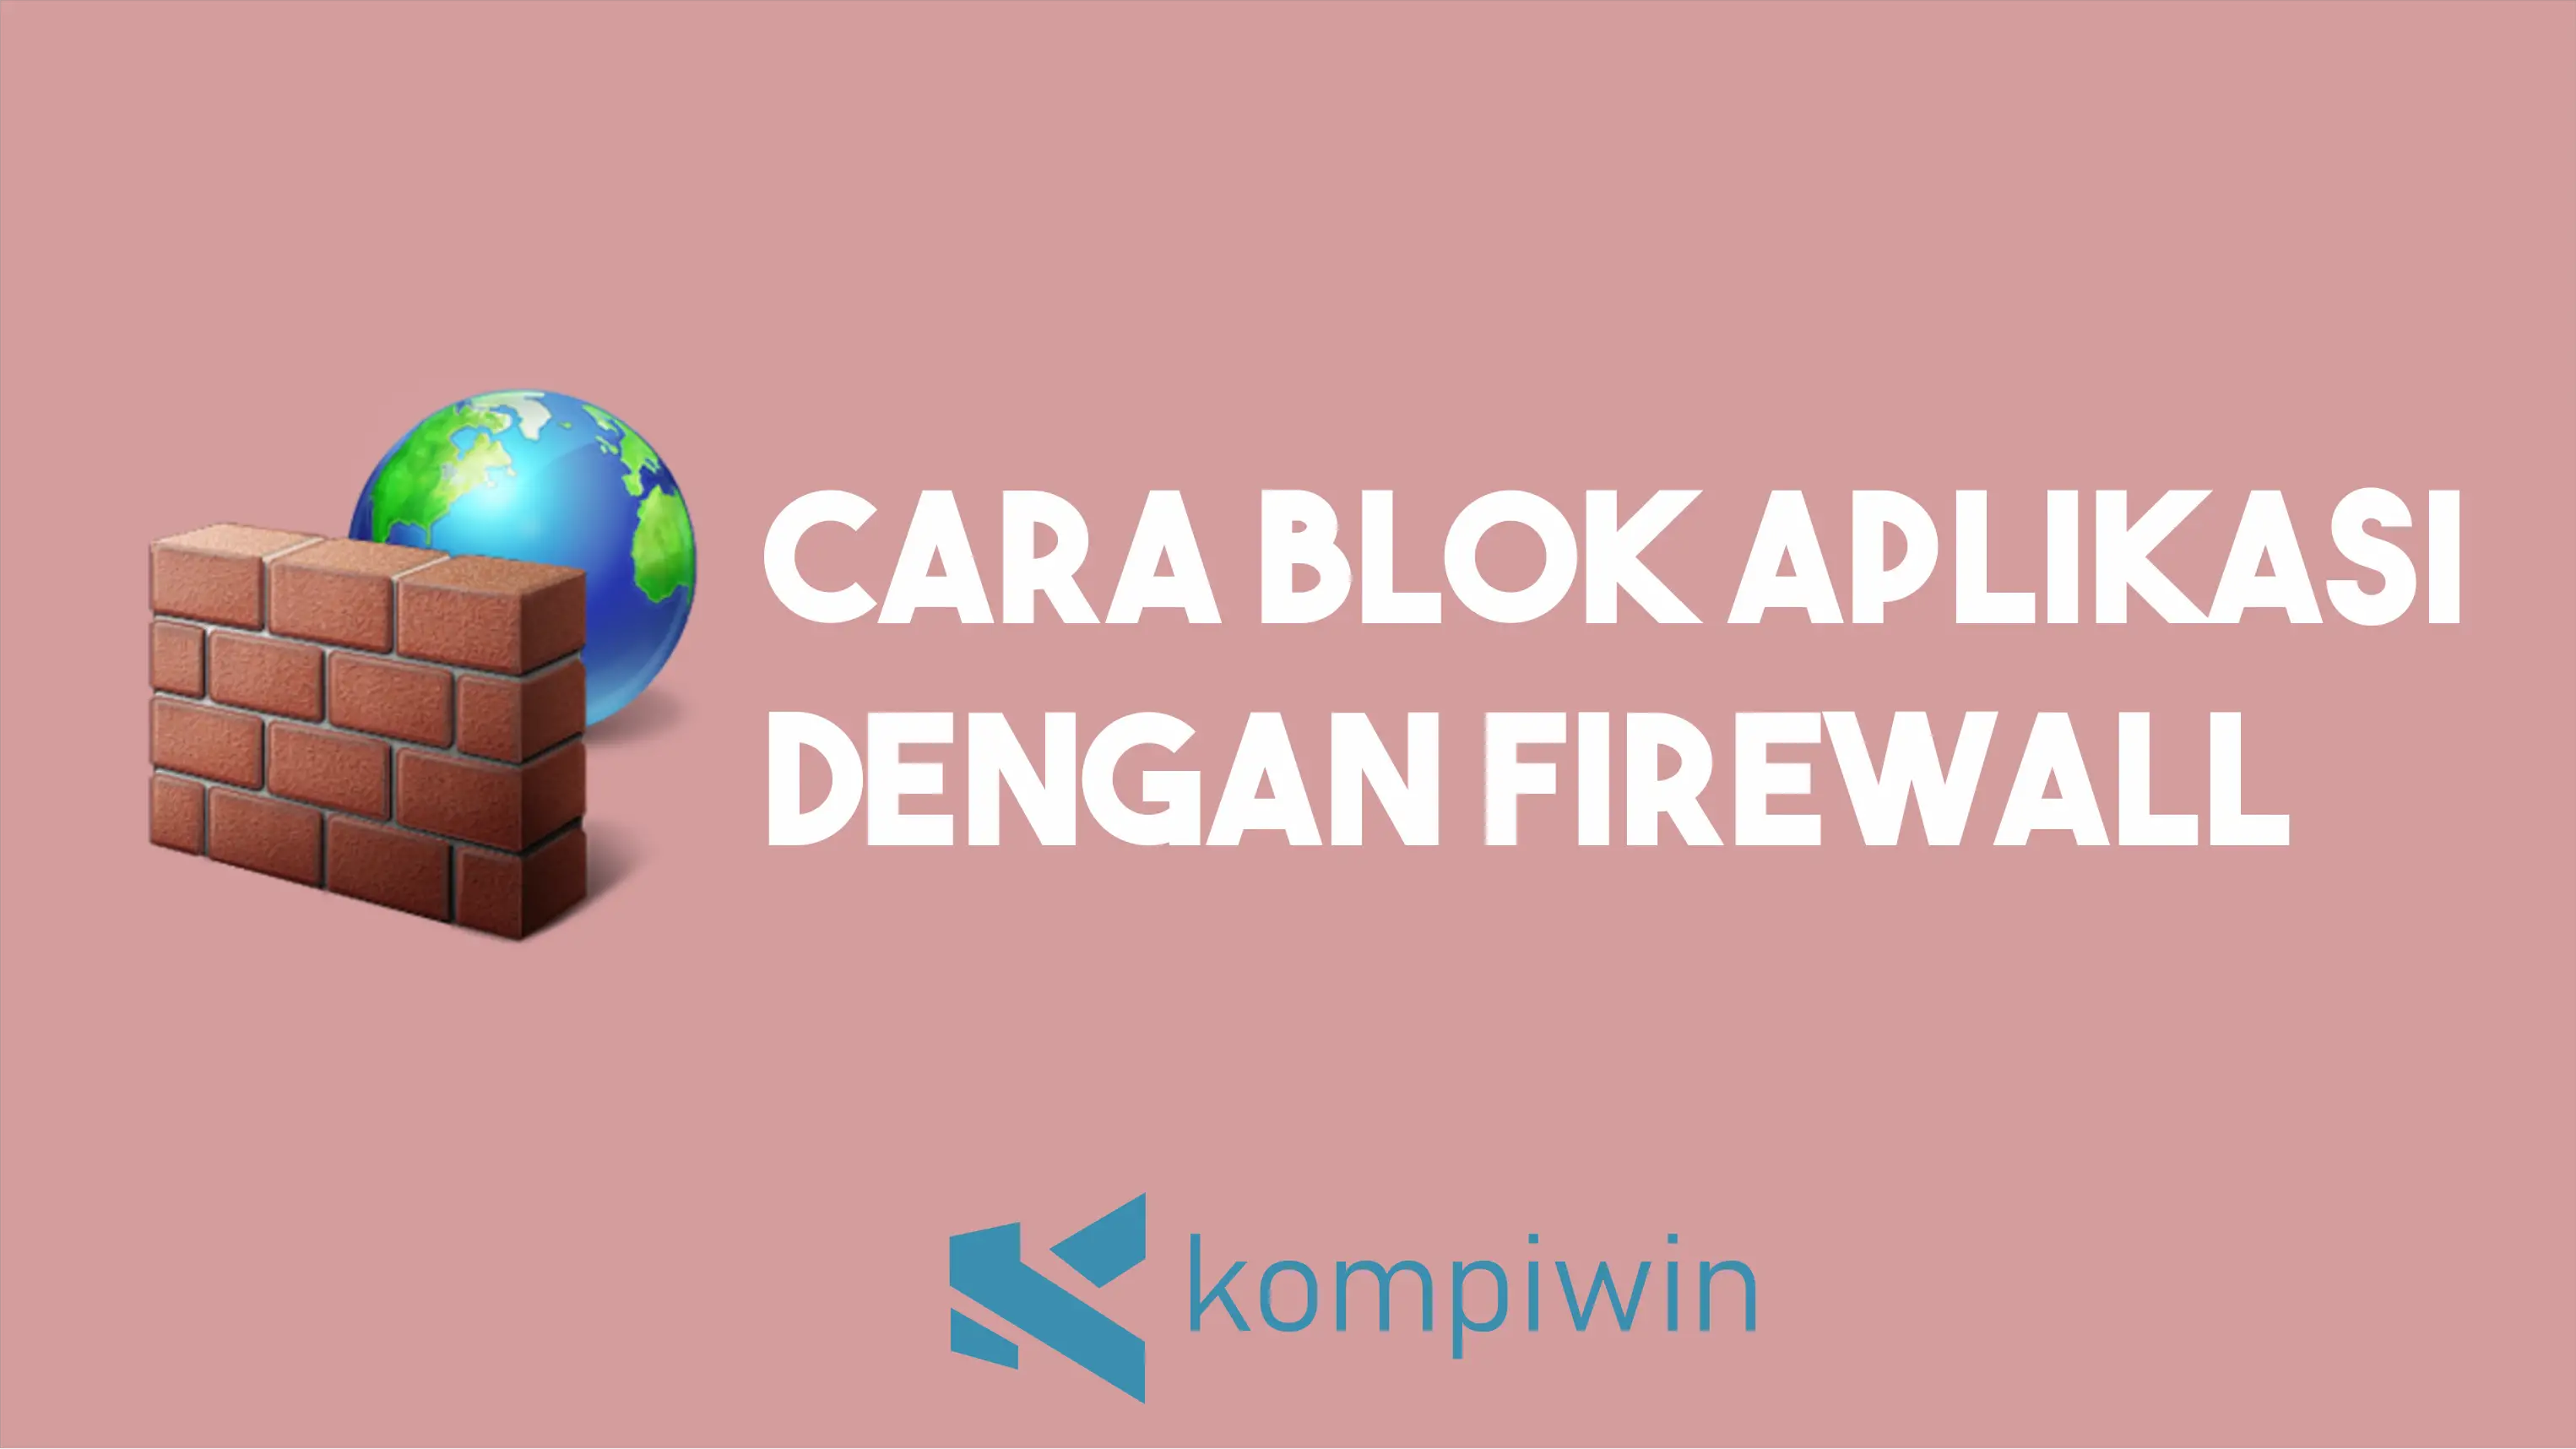 Cara Blokir Aplikasi Dengan Firewall